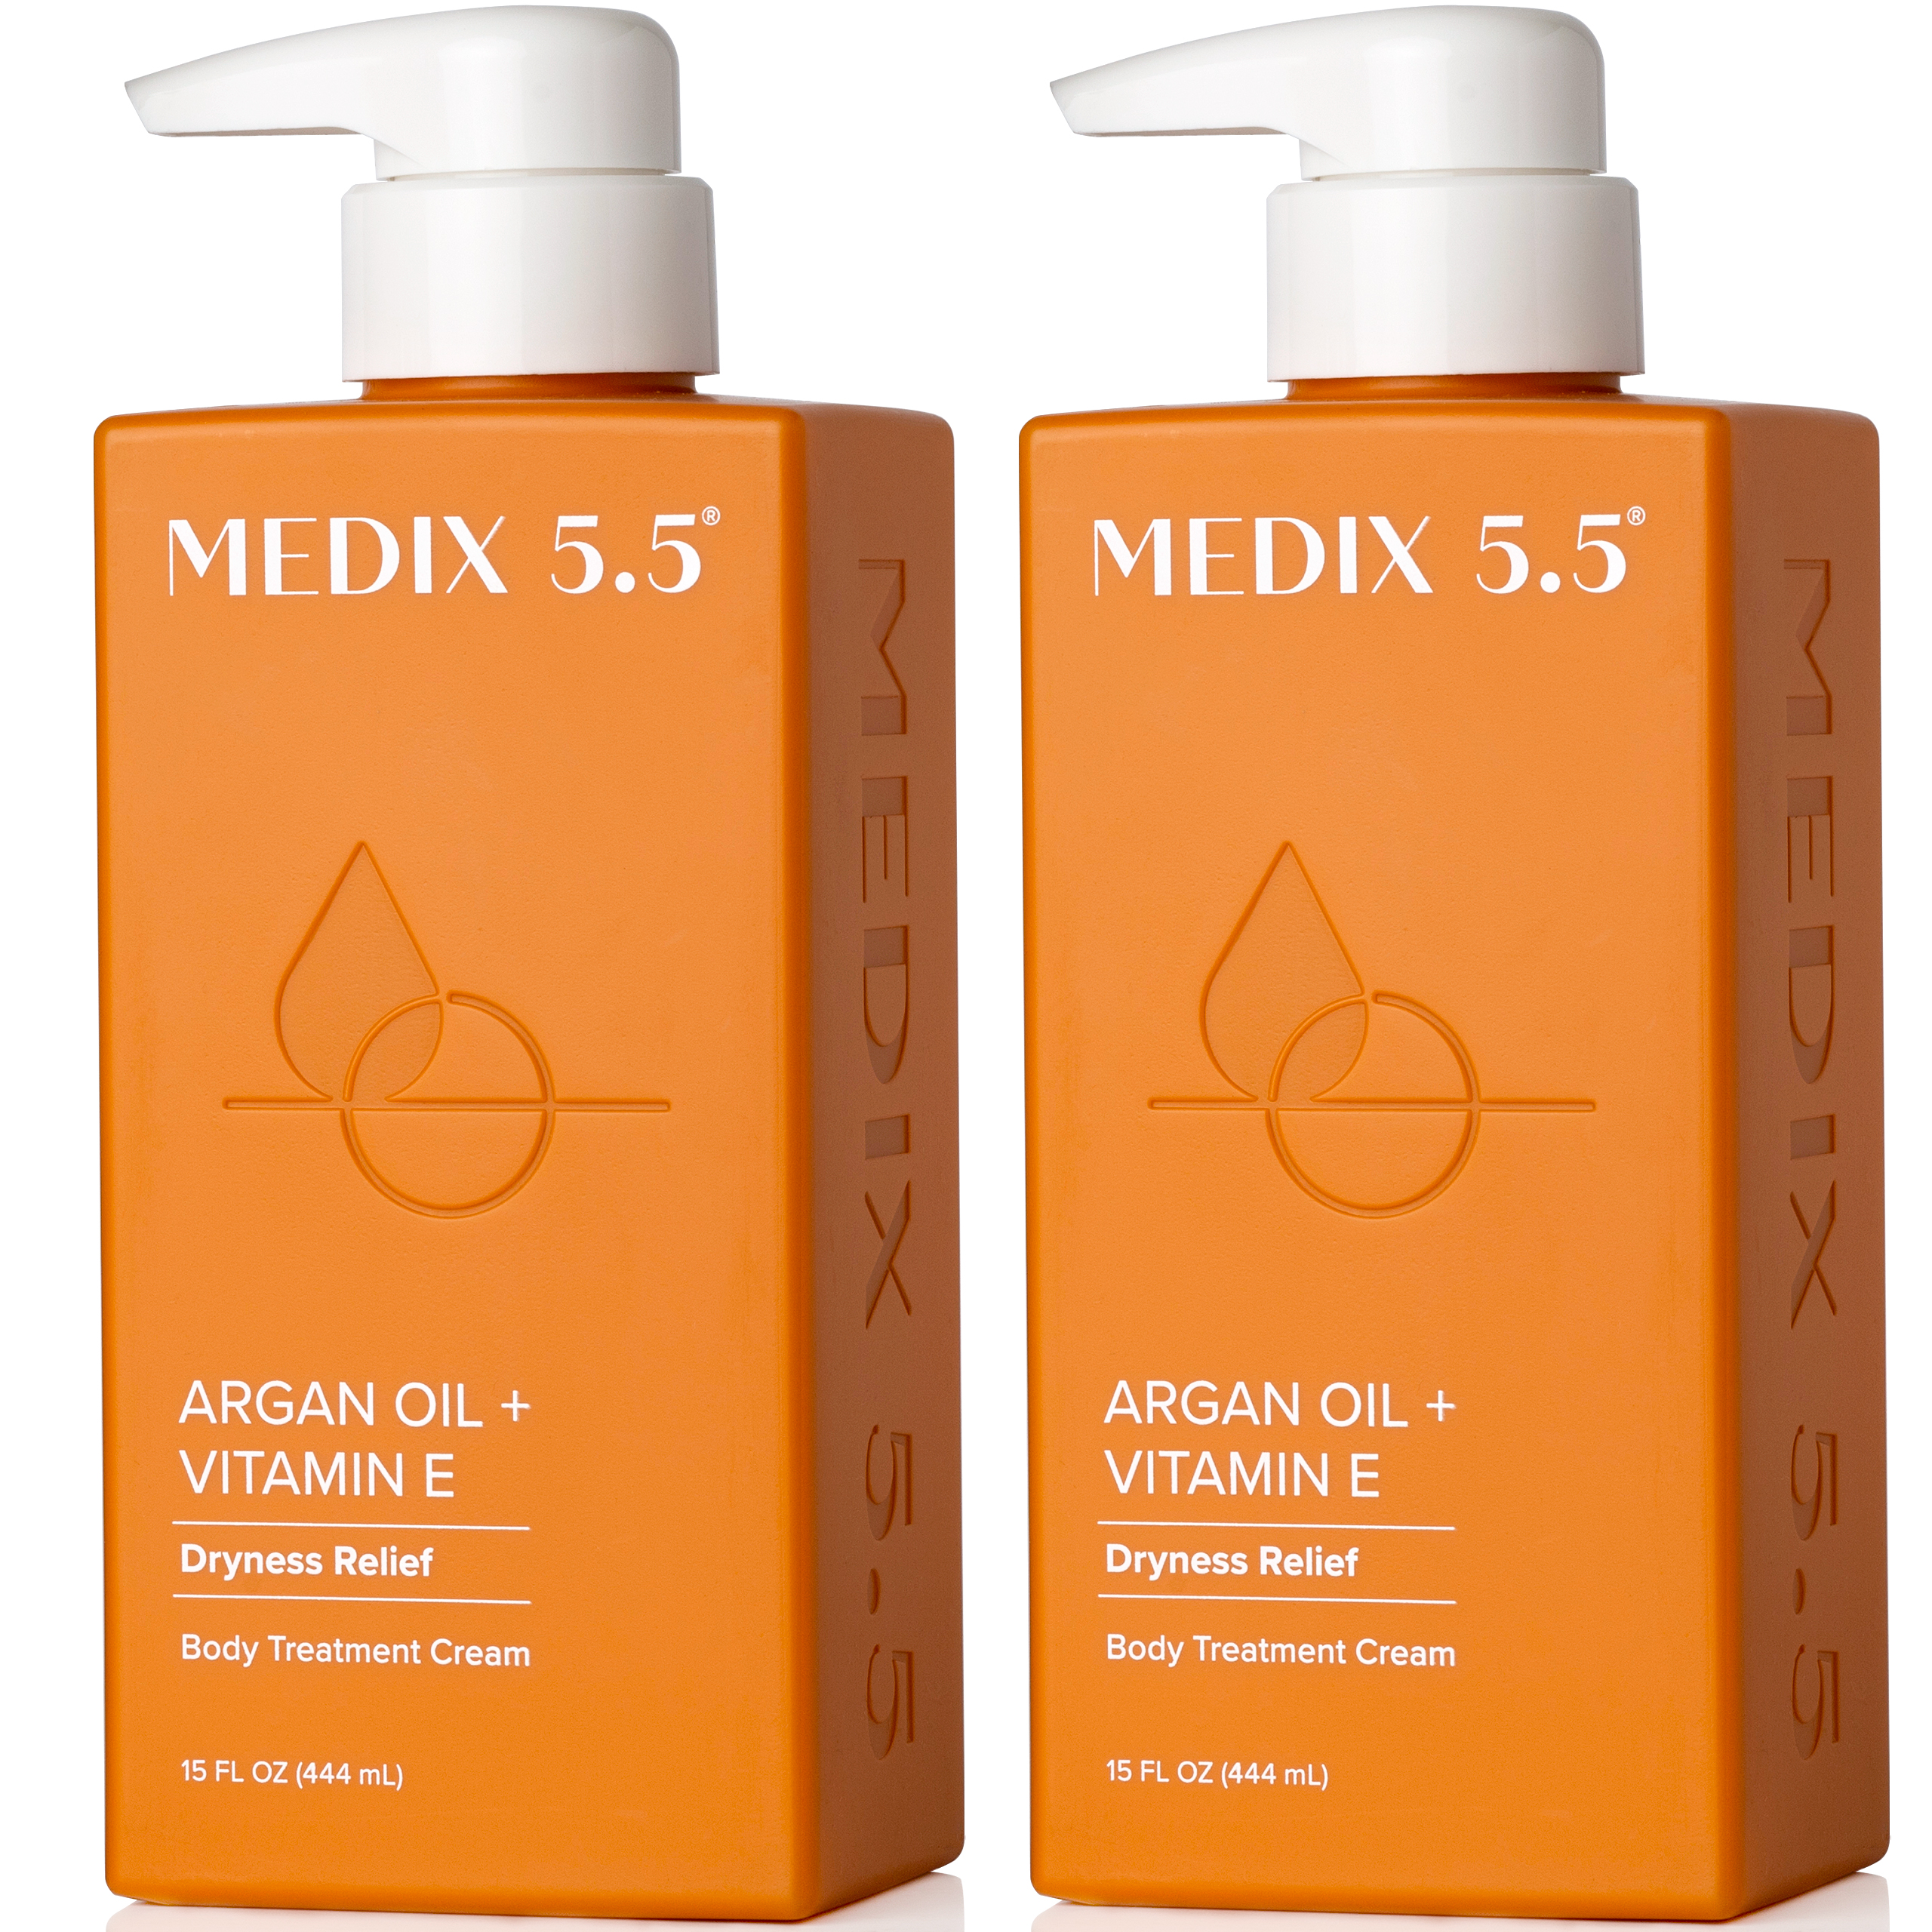 MEDIX 5.5 Argan Oil + Vitamin E Anti-Aging Body Cream Two Pack 15 fl oz - image 1 of 9